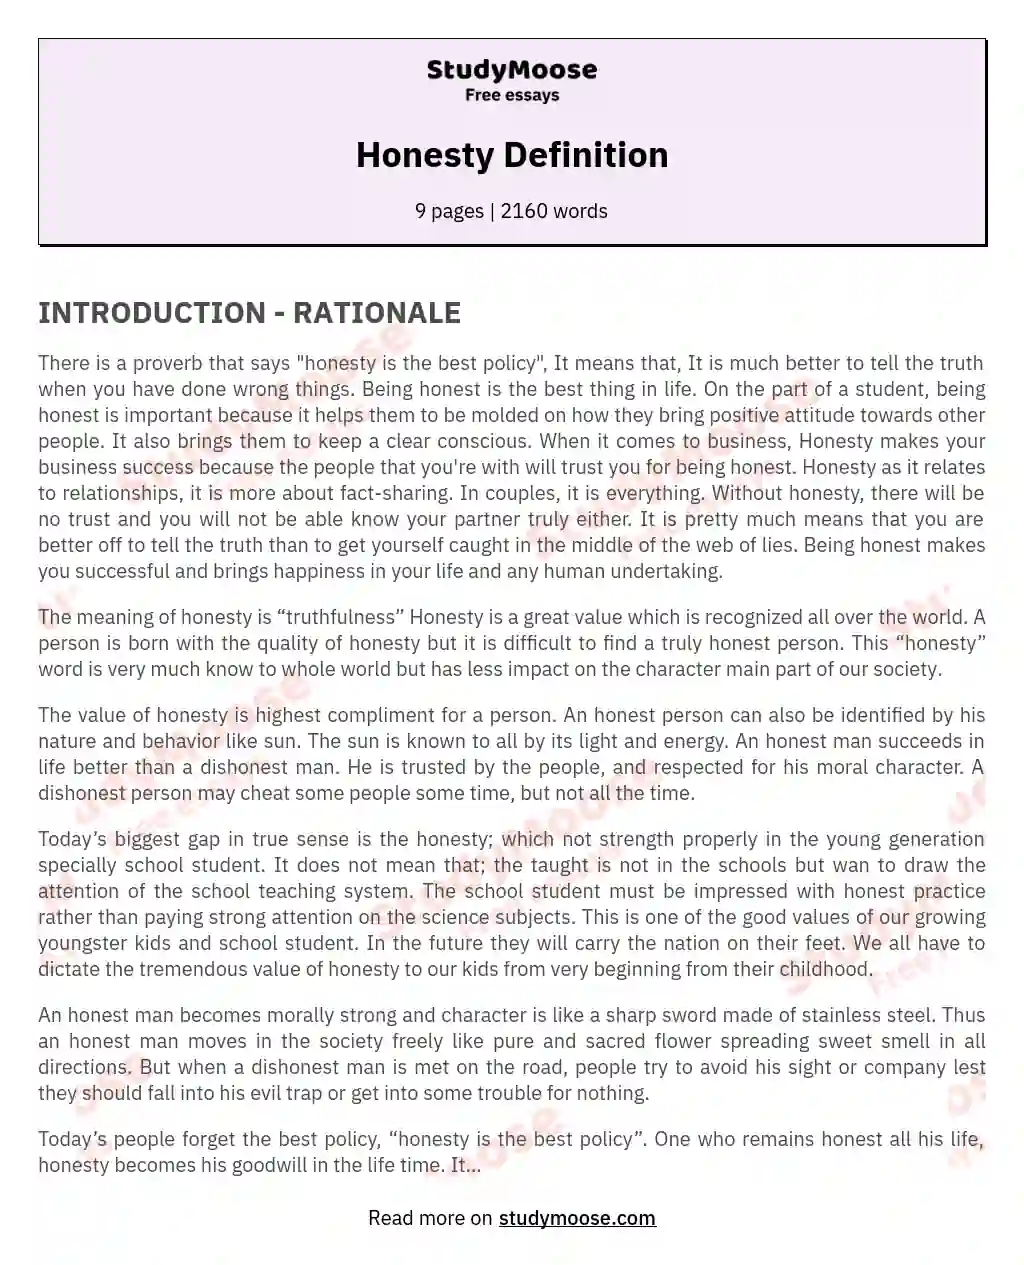 Honesty Definition essay